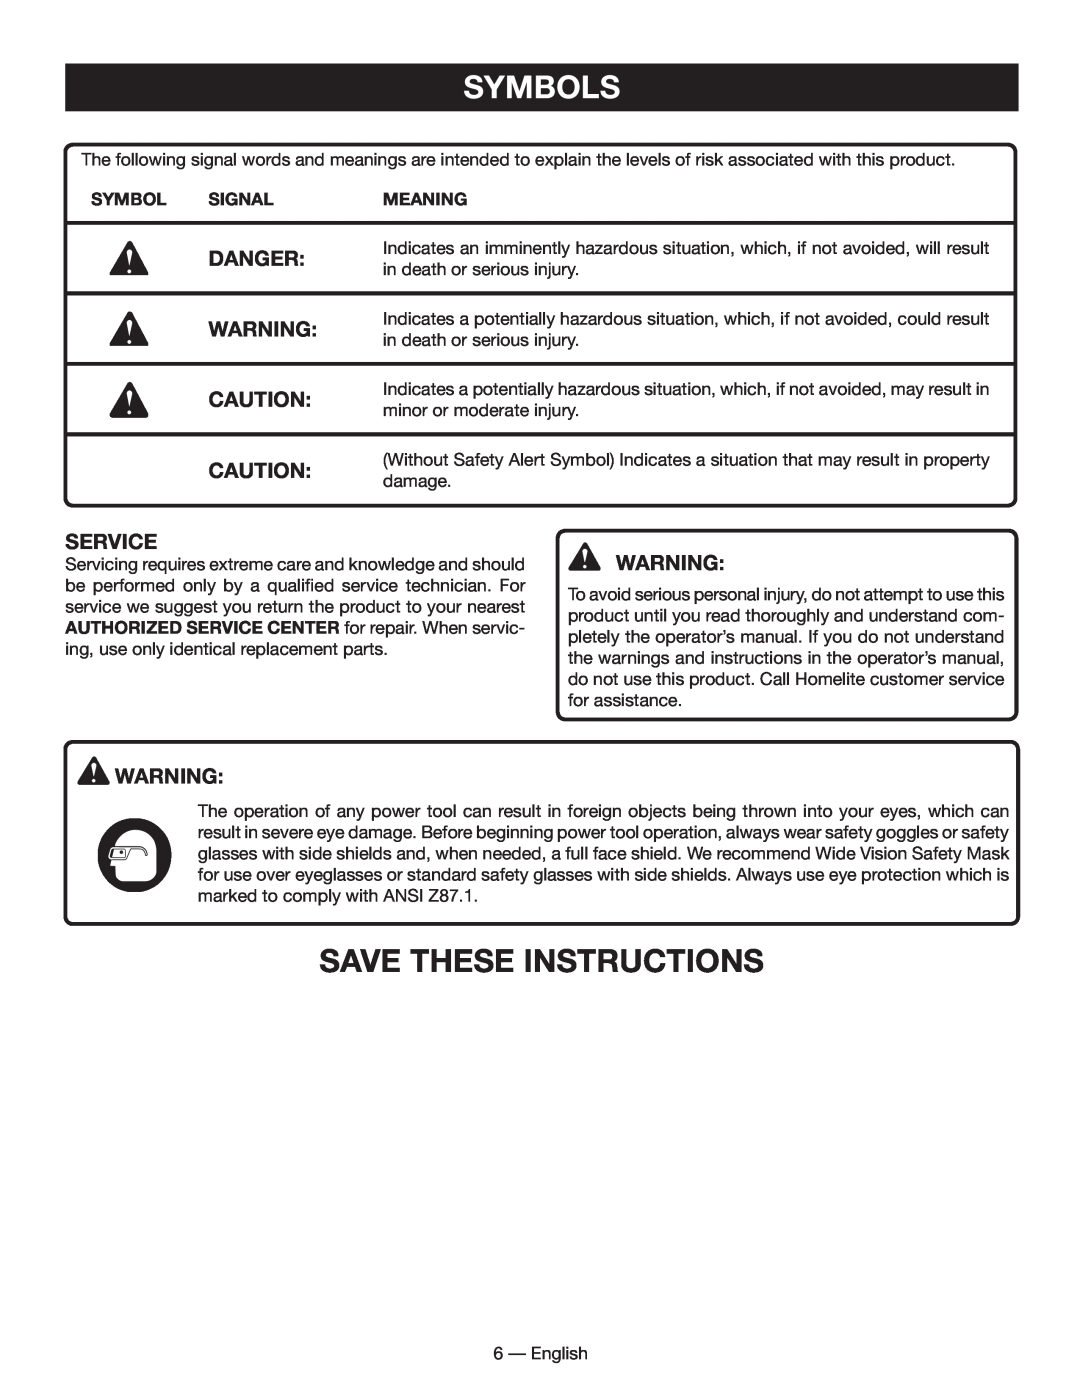 Homelite UT49102 manuel dutilisation Save These Instructions, Symbols, Danger, Service 